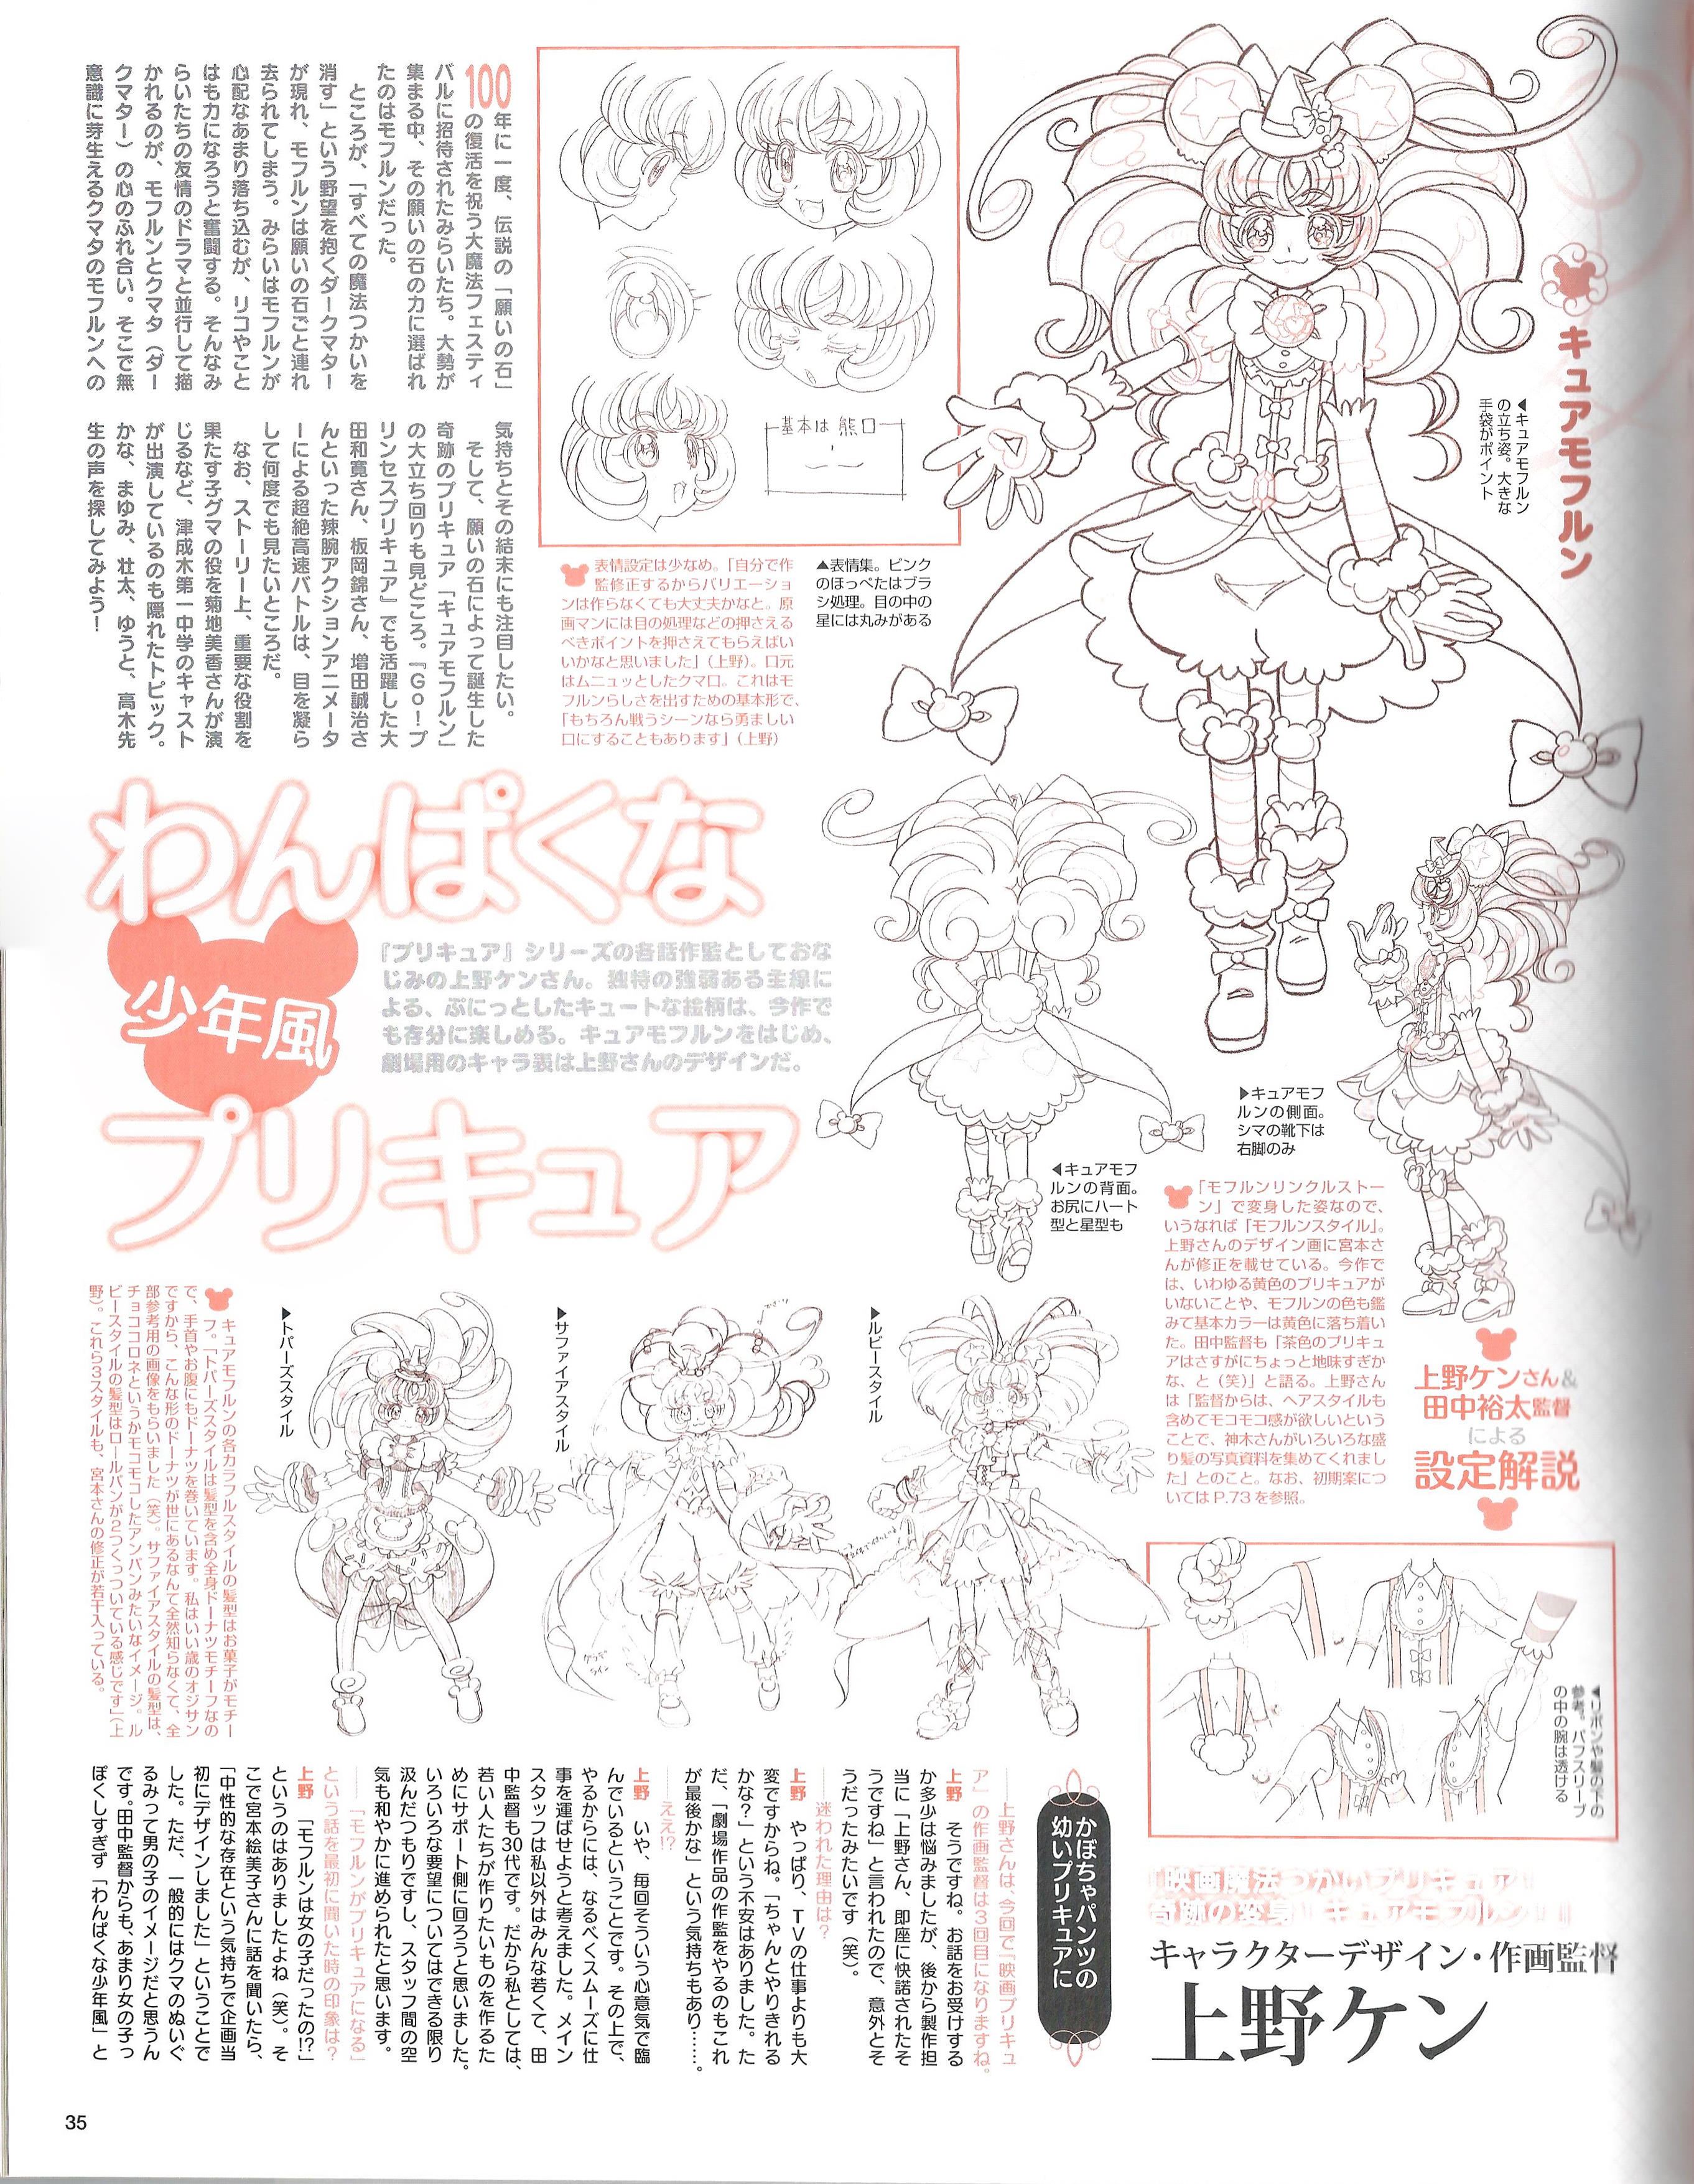 Interview With Ueno Ken Animage S Pretty Cure Issue 16 Pretty Cure Wiki Fandom